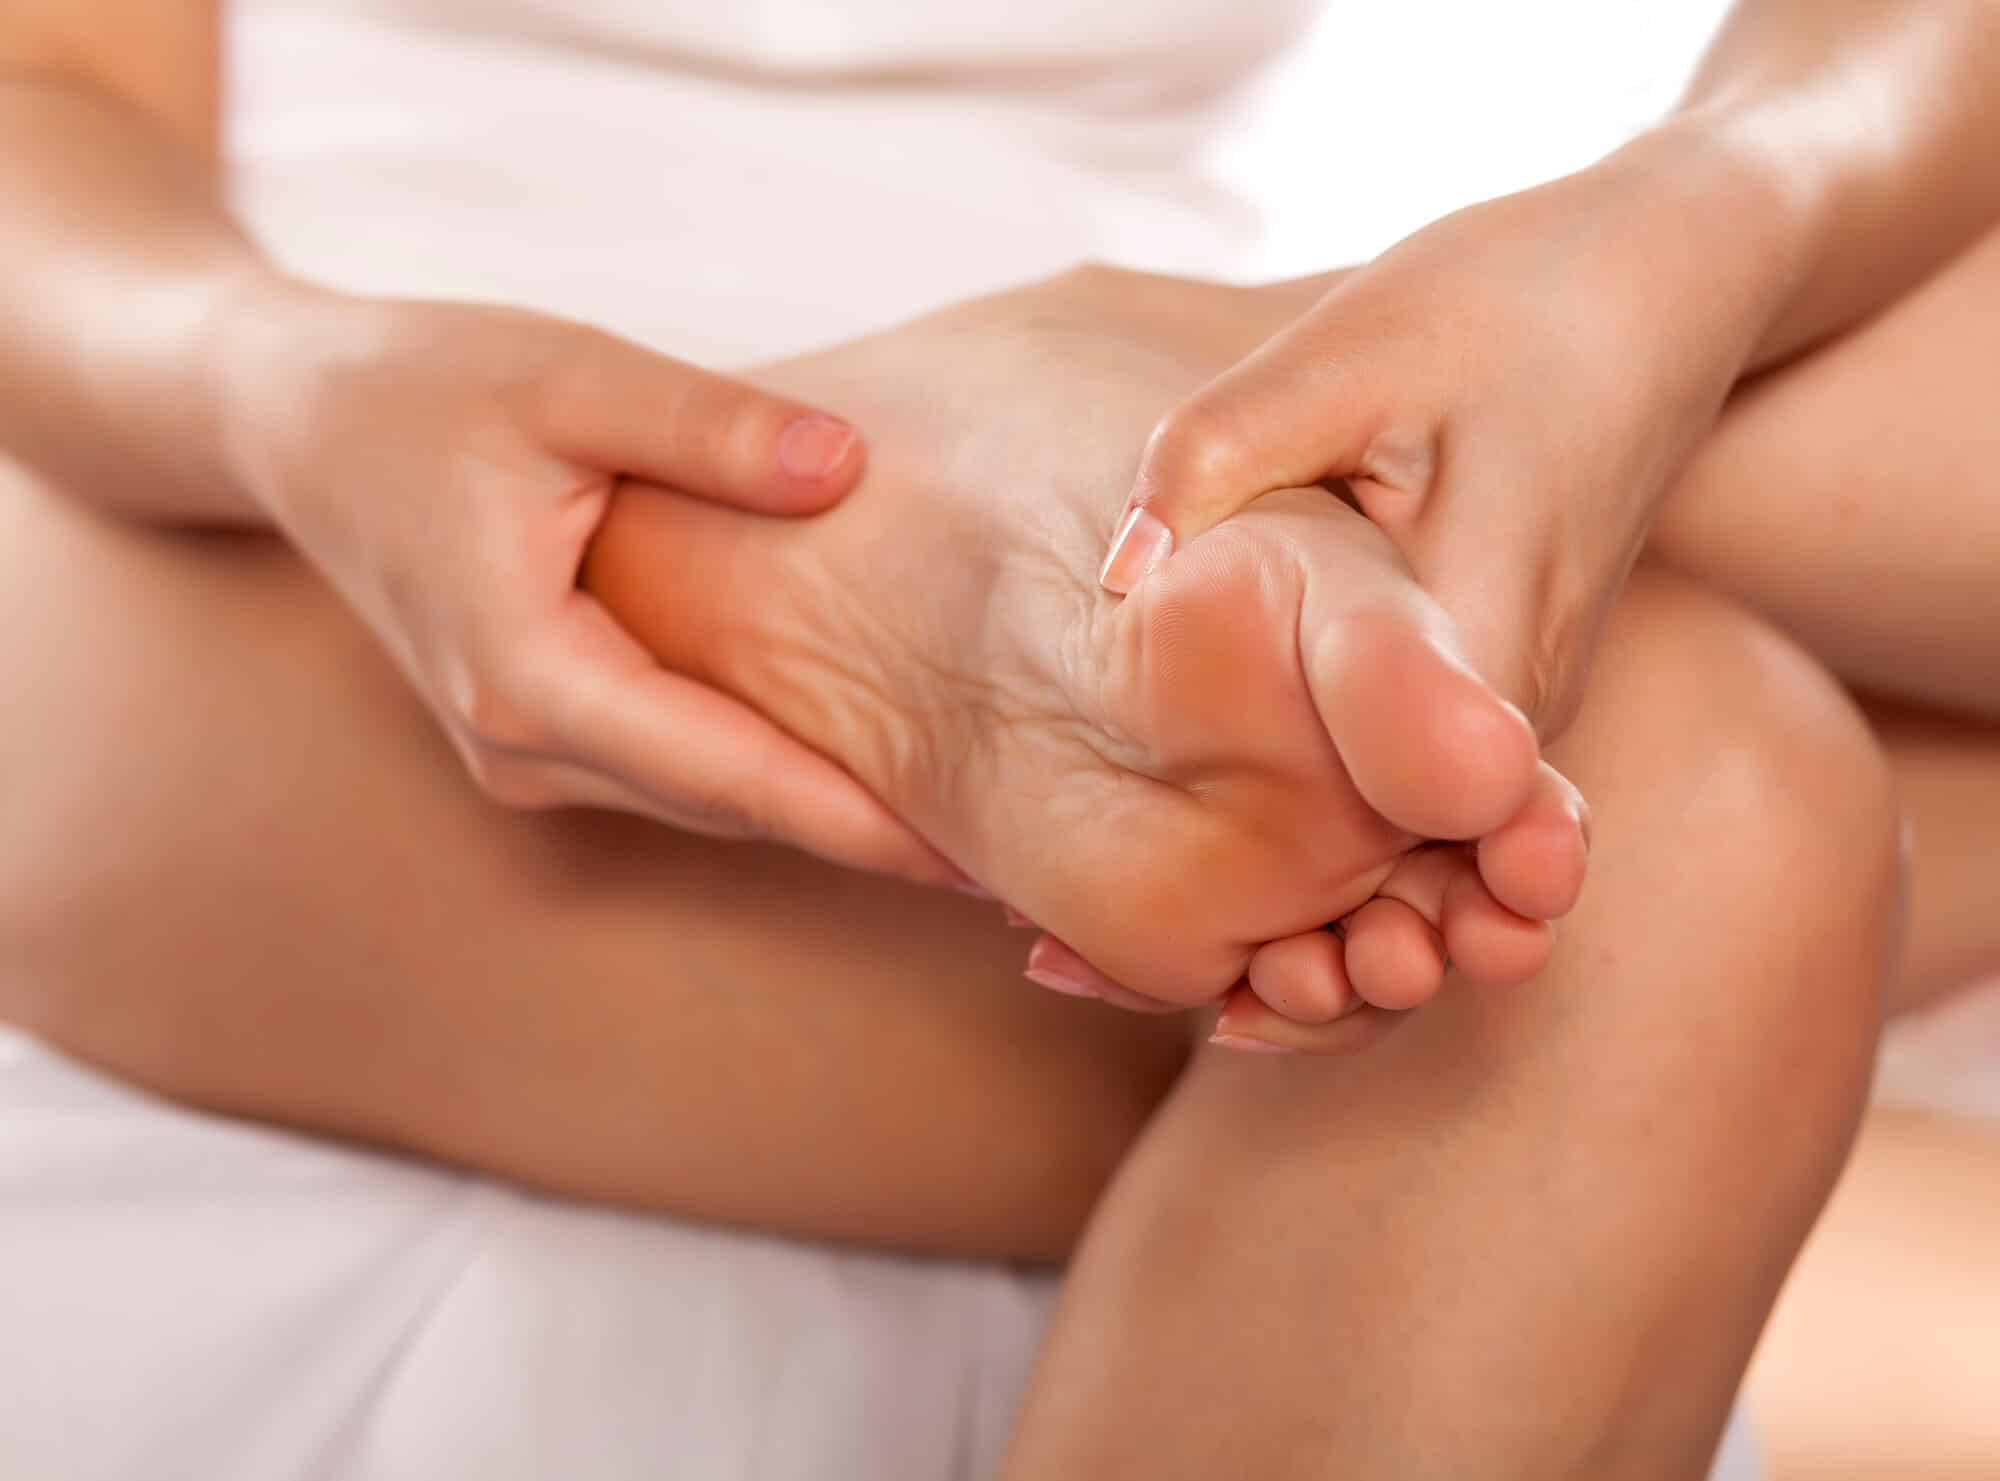 self-foot massage